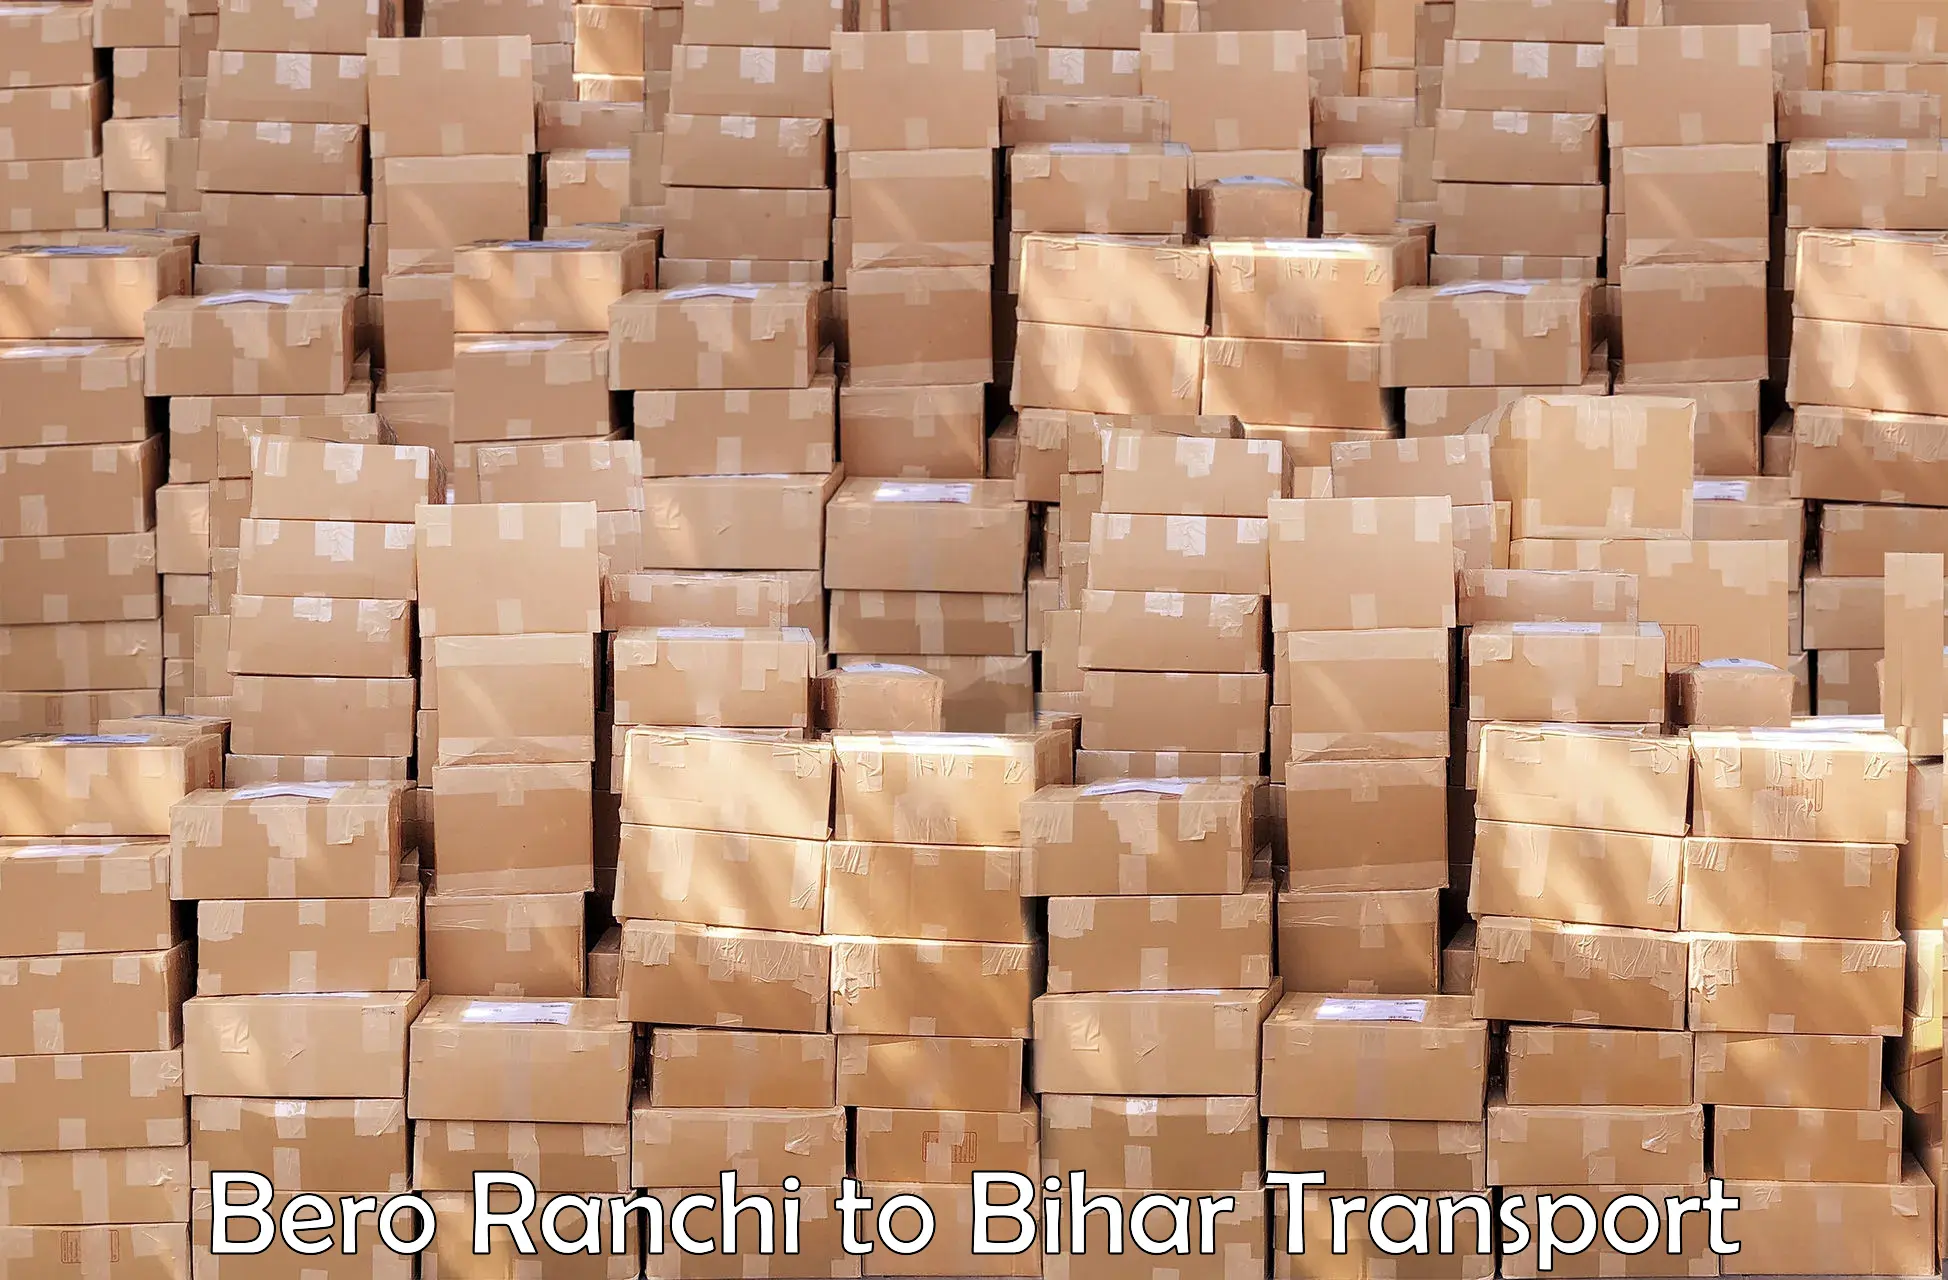 Sending bike to another city Bero Ranchi to Maheshkhunt